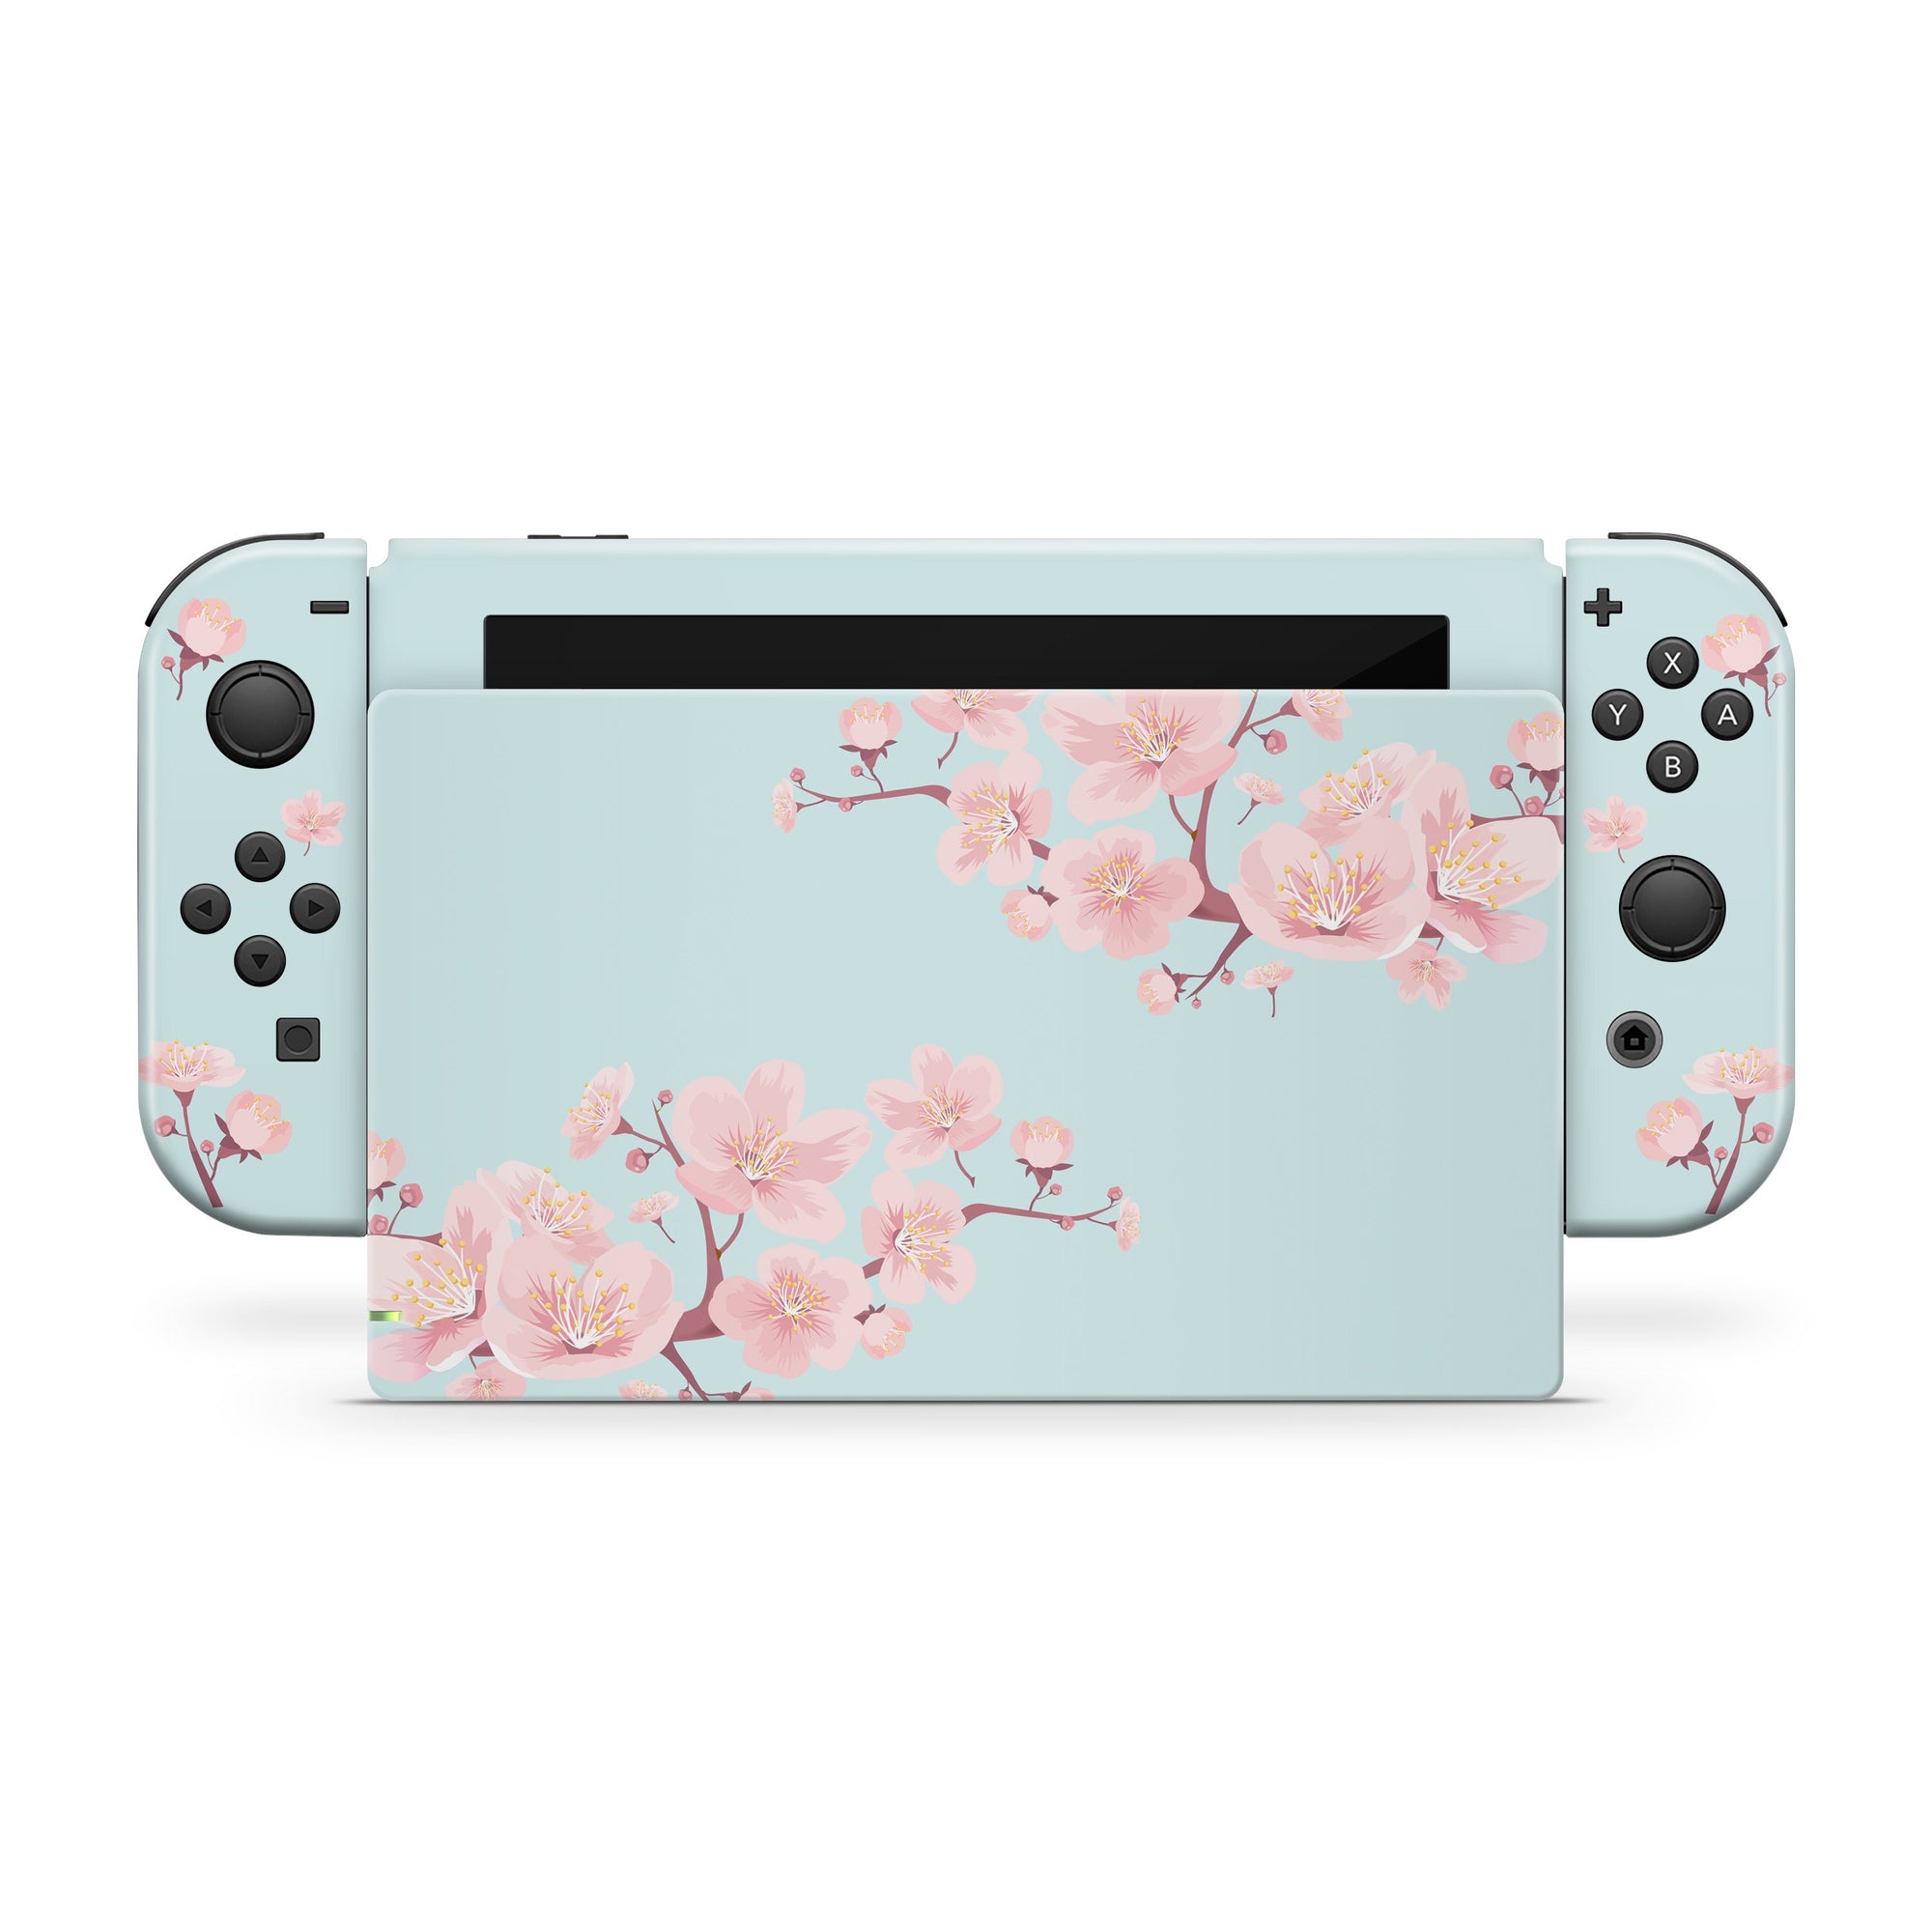 Nintendo switches skin Cherries blossoms , Sakura Flowers switch skin Full cover decal vinyl 3m stickers